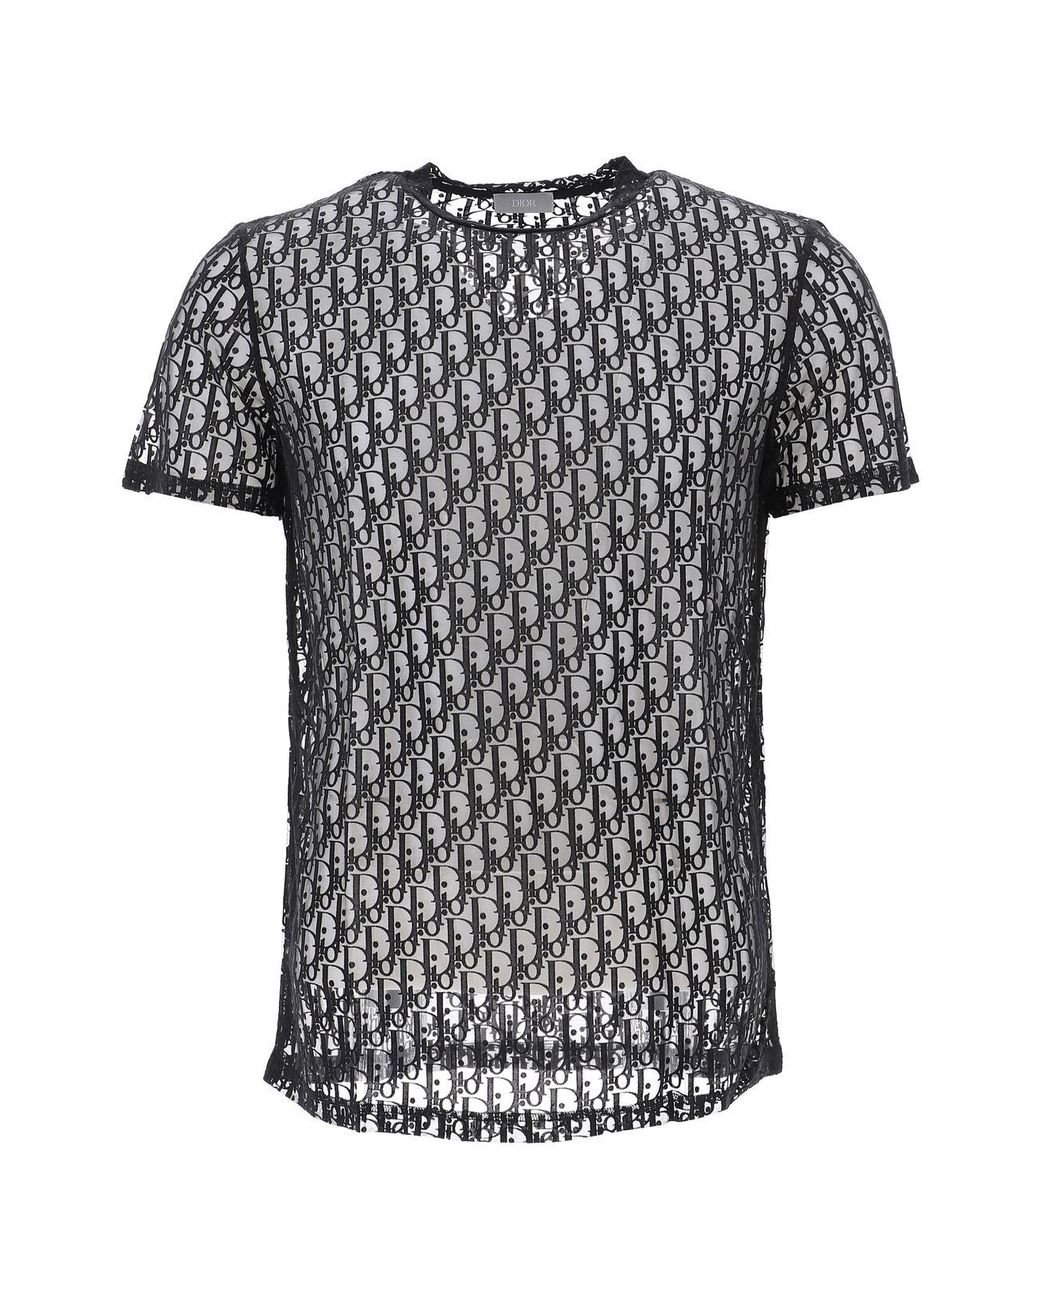 Dior Homme All Over Logo T-shirt in Black for Men | Lyst